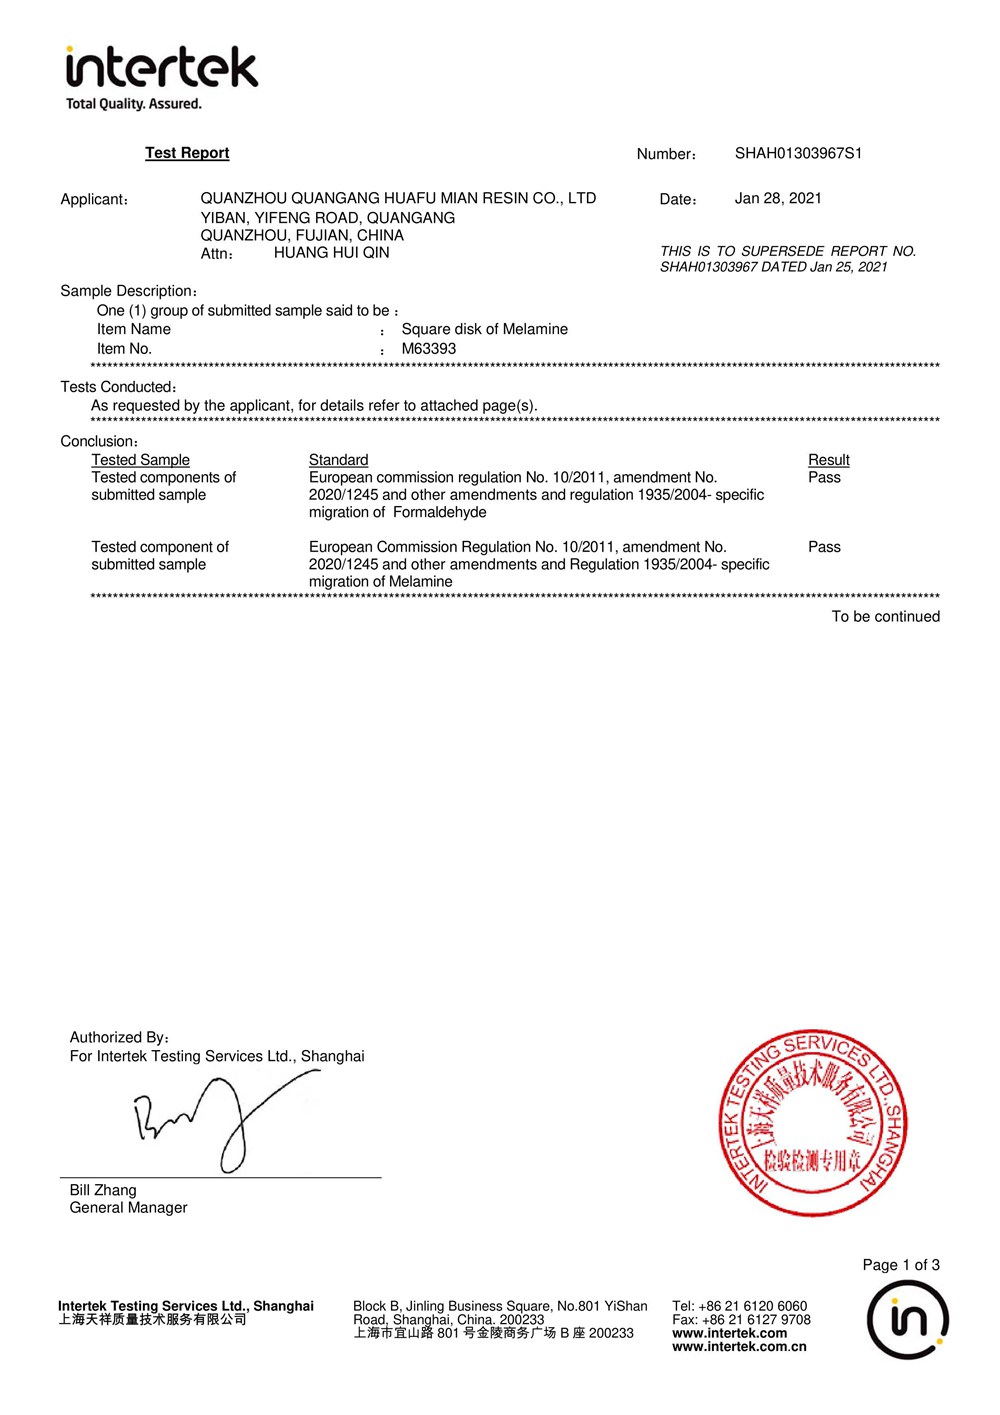 Huafu Chemicals: Сертификат Intertek в 2021 году